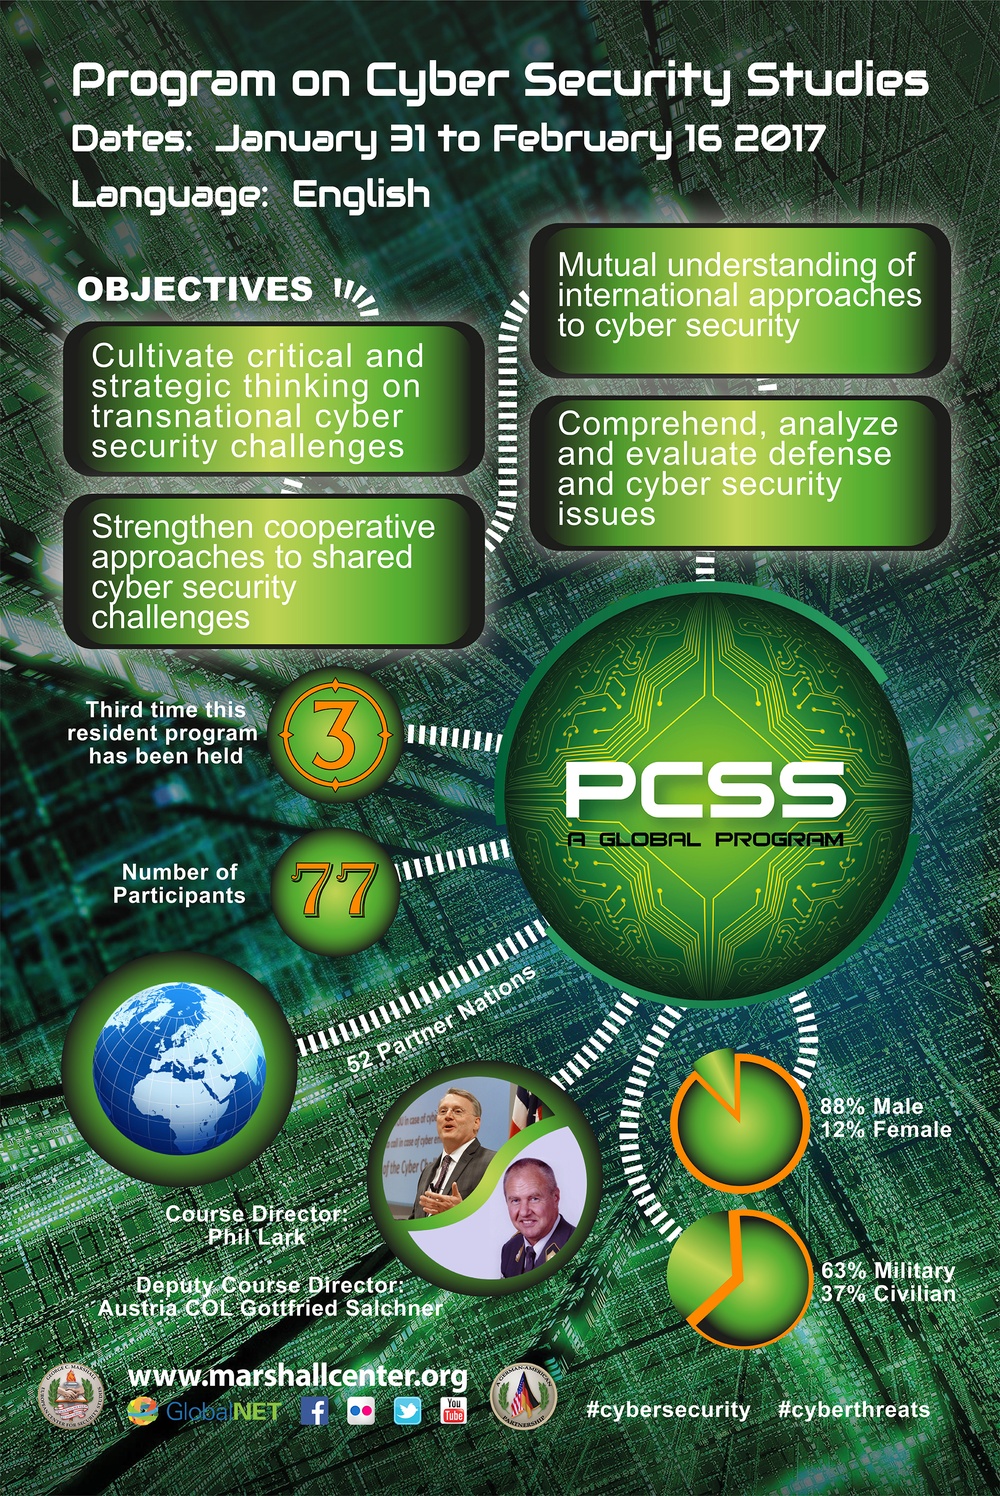 Program on Cyber Security Studies Infographic